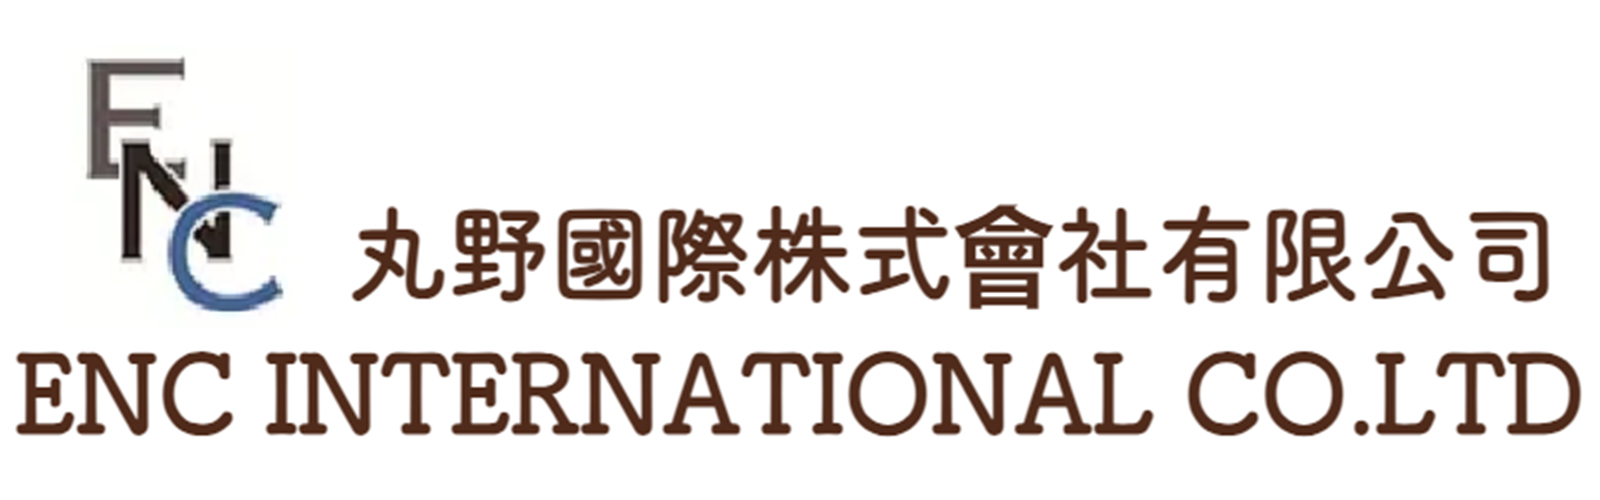 ENC International Company Limited 丸野國際株式會社 